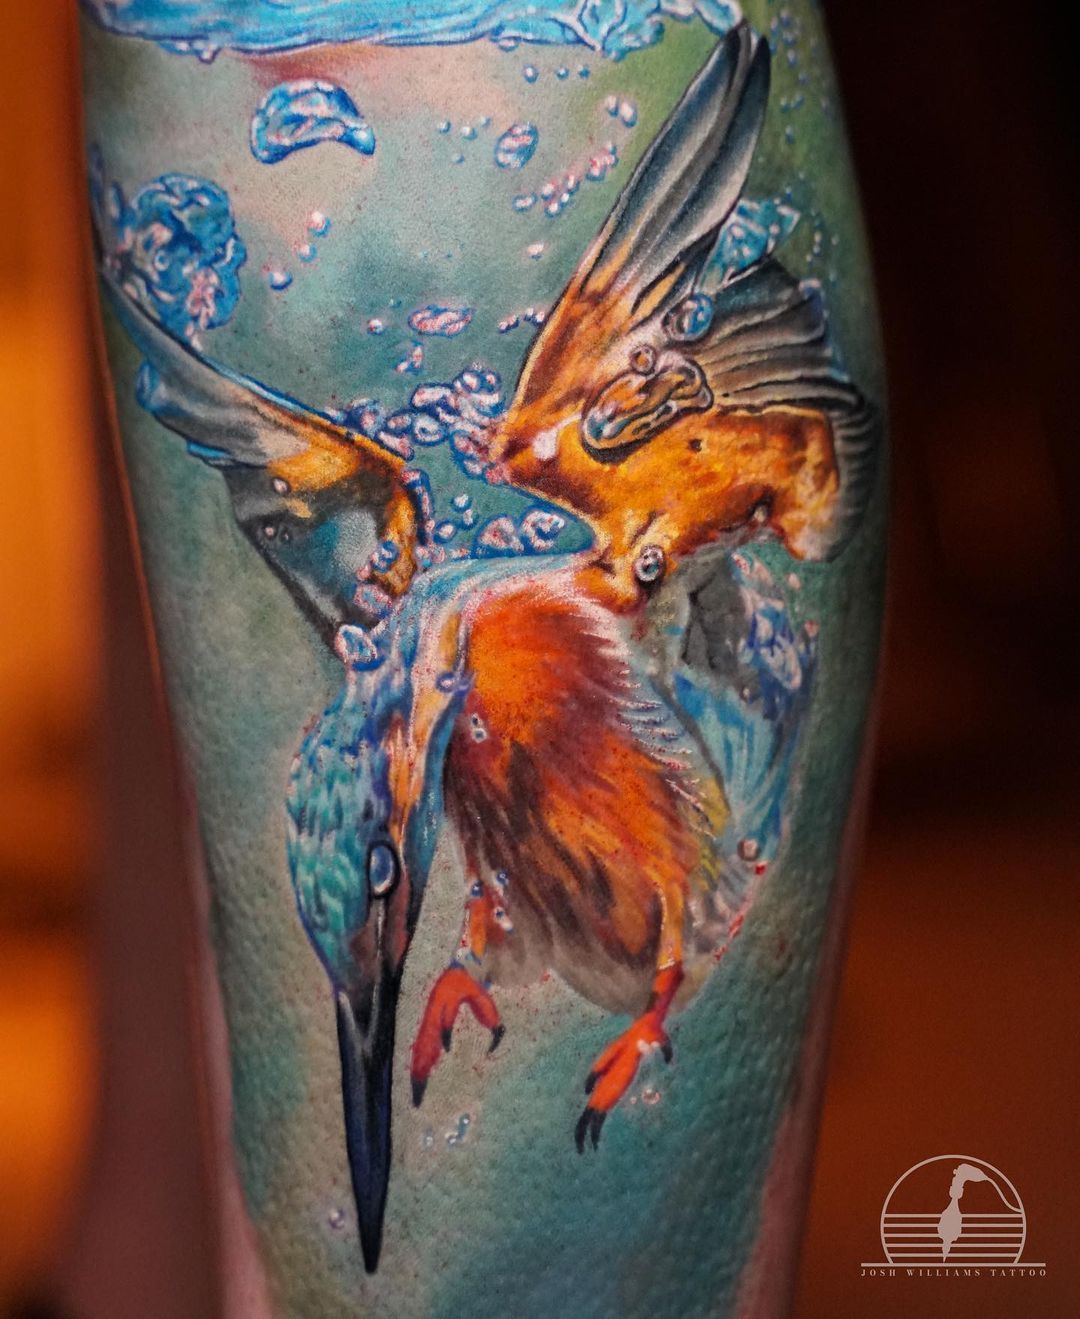 Painted bird tattoo - Best Tattoo Ideas Gallery